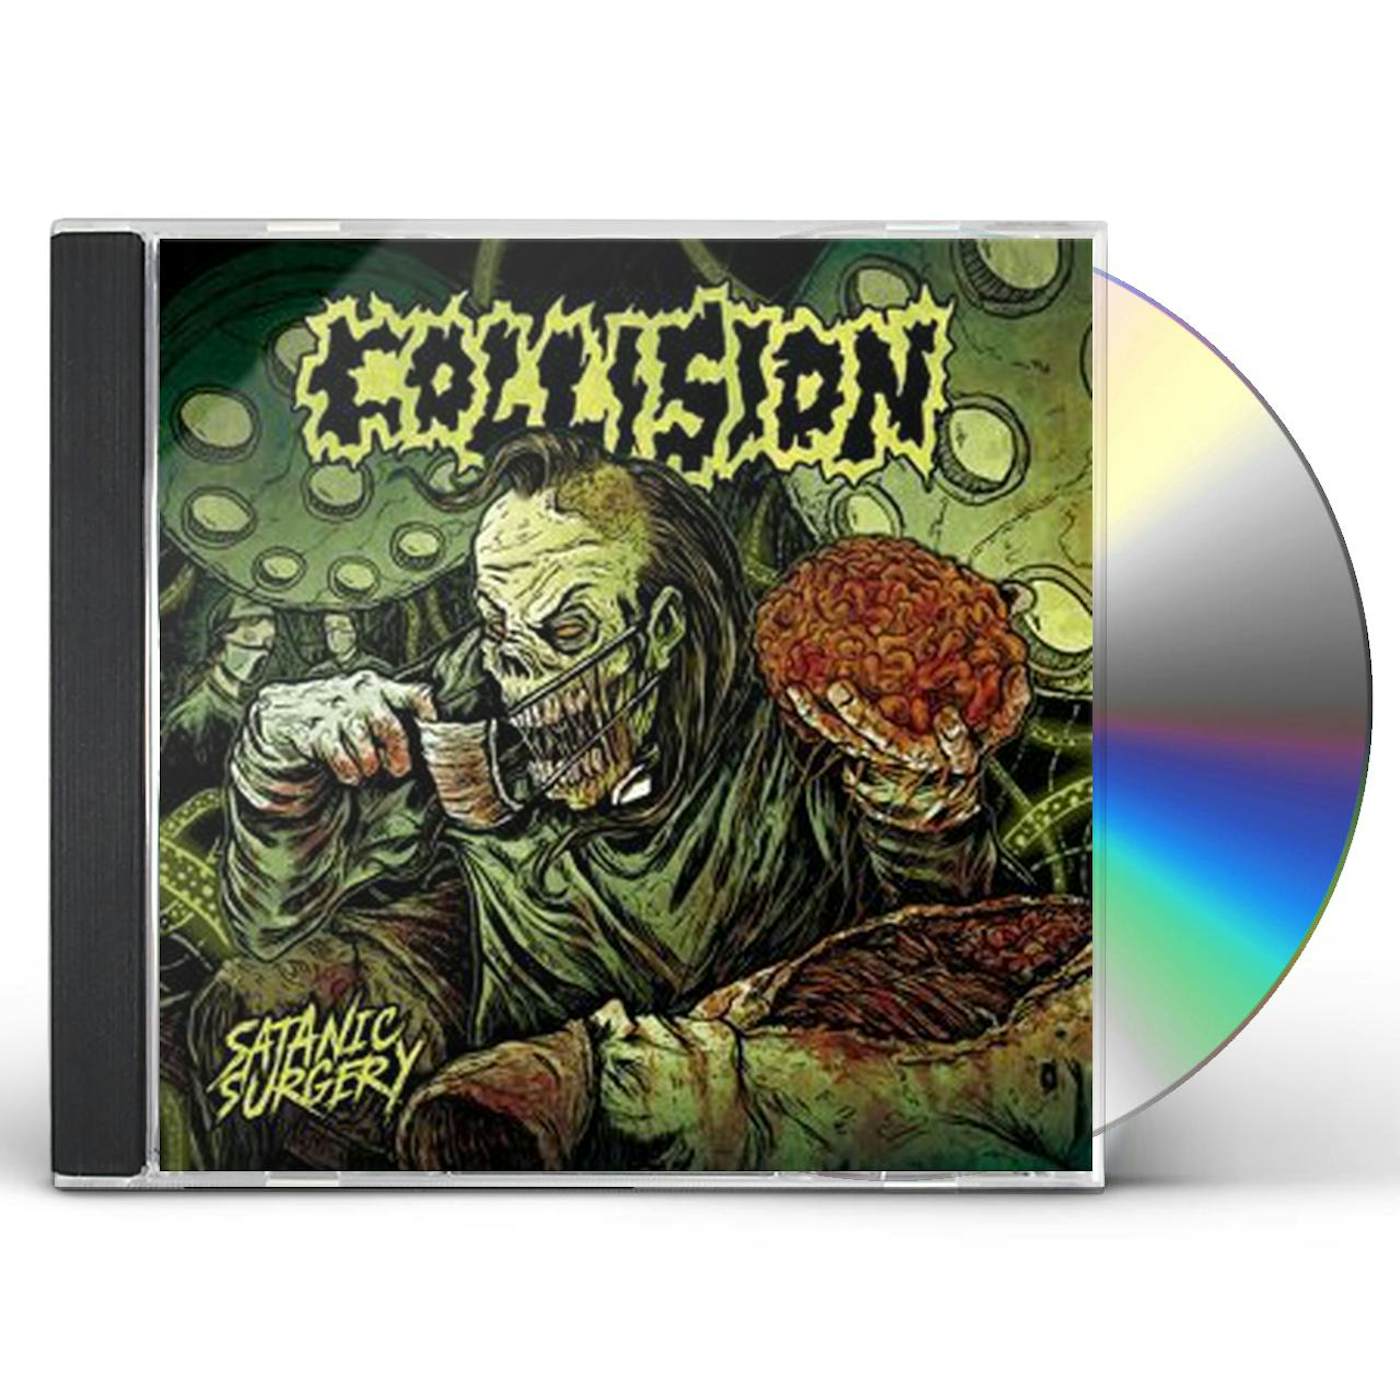 The Collision SATANIC SURGERY CD